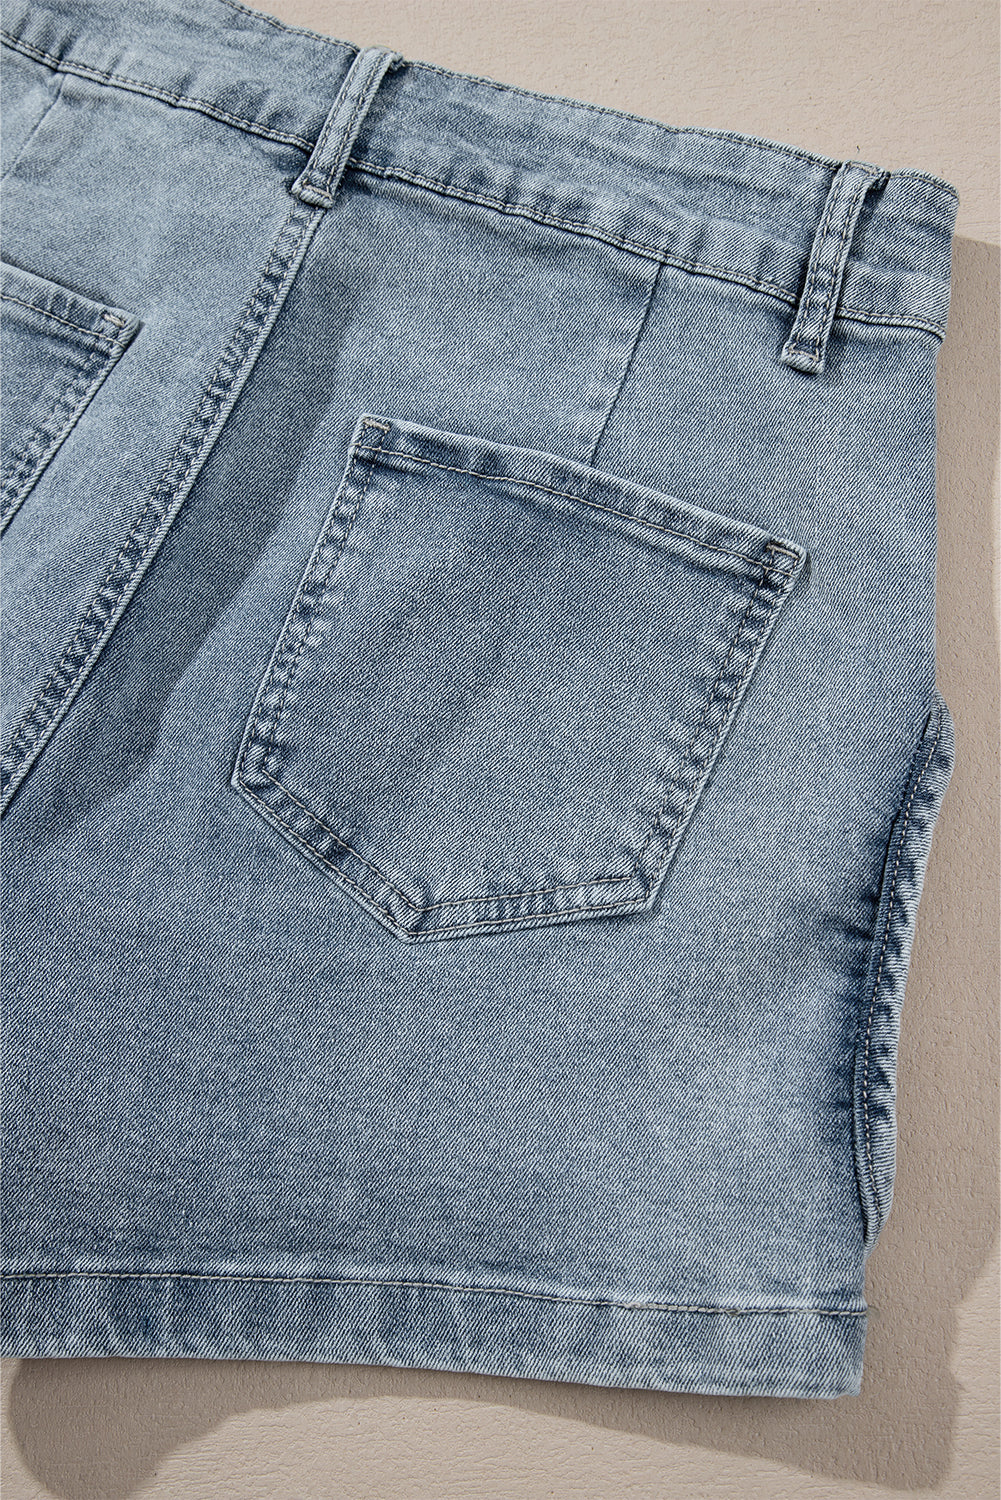 Dusk Blue Studded Acid Wash Jean Shorts